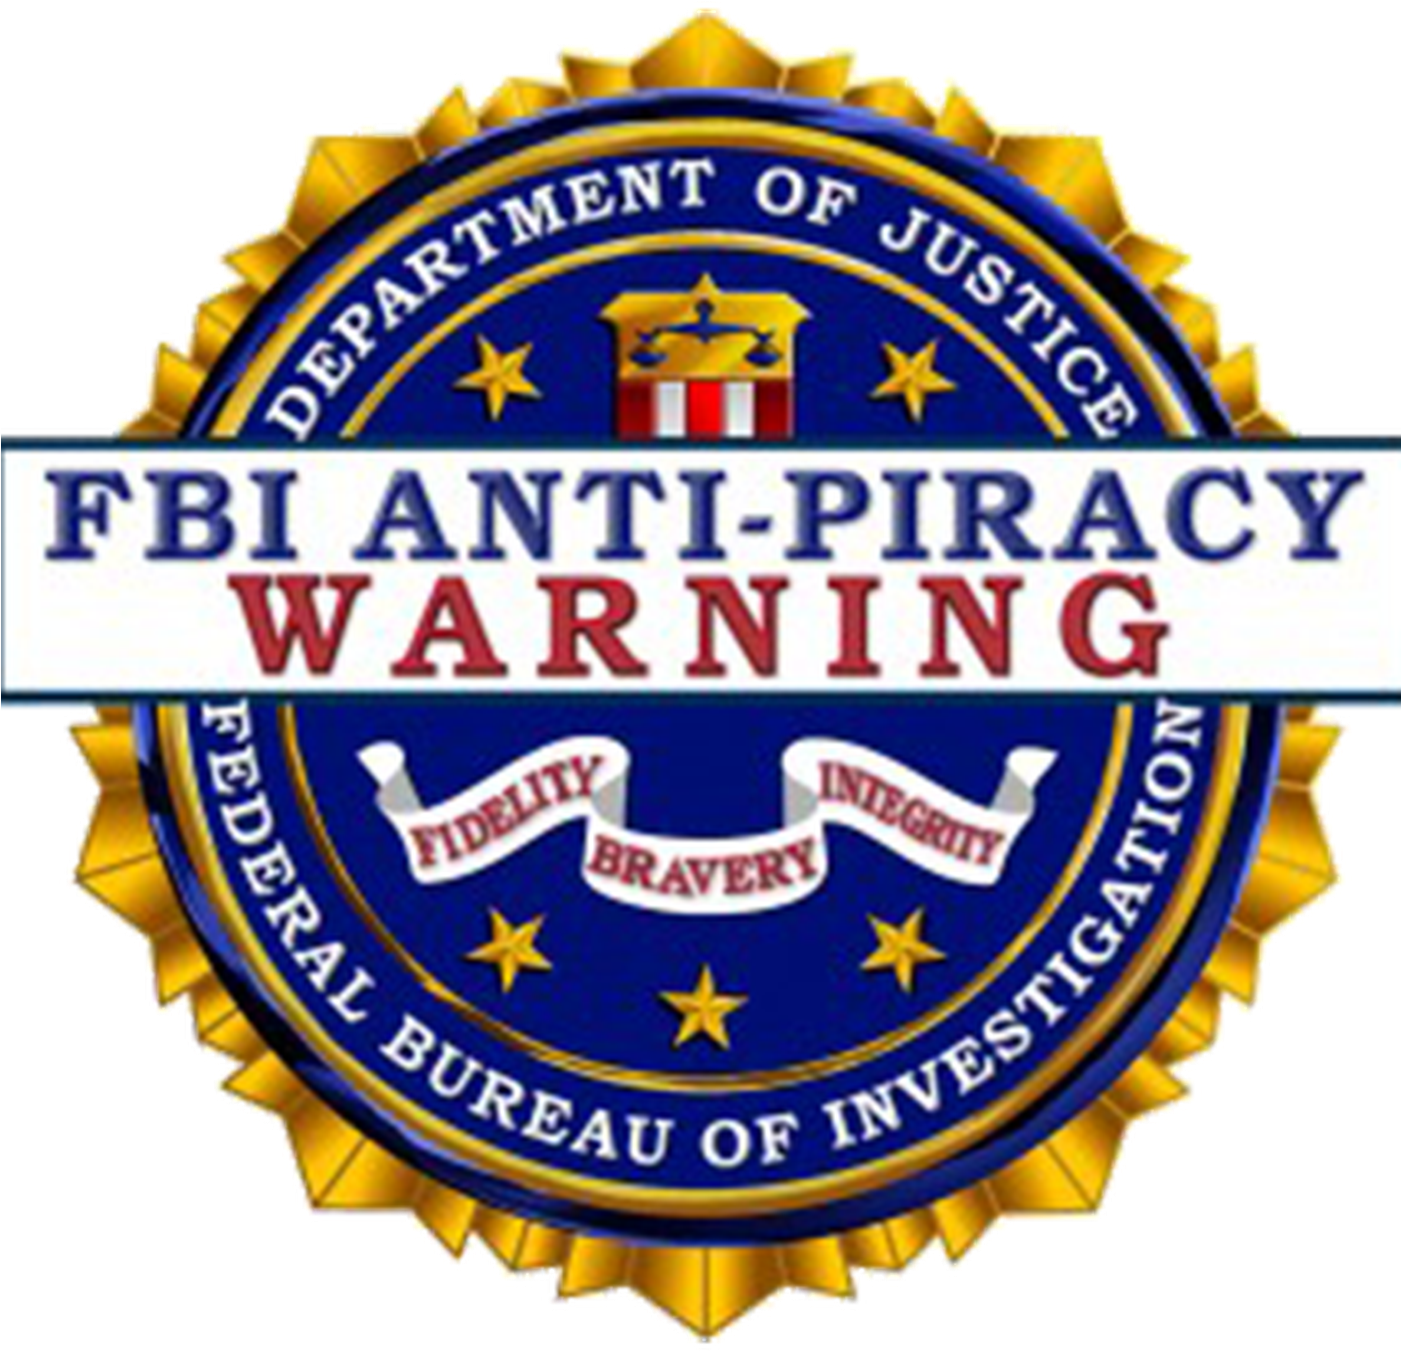 1400 X 1400 12 - Symbols Of The Federal Bureau Of Investigation (1400x1400)